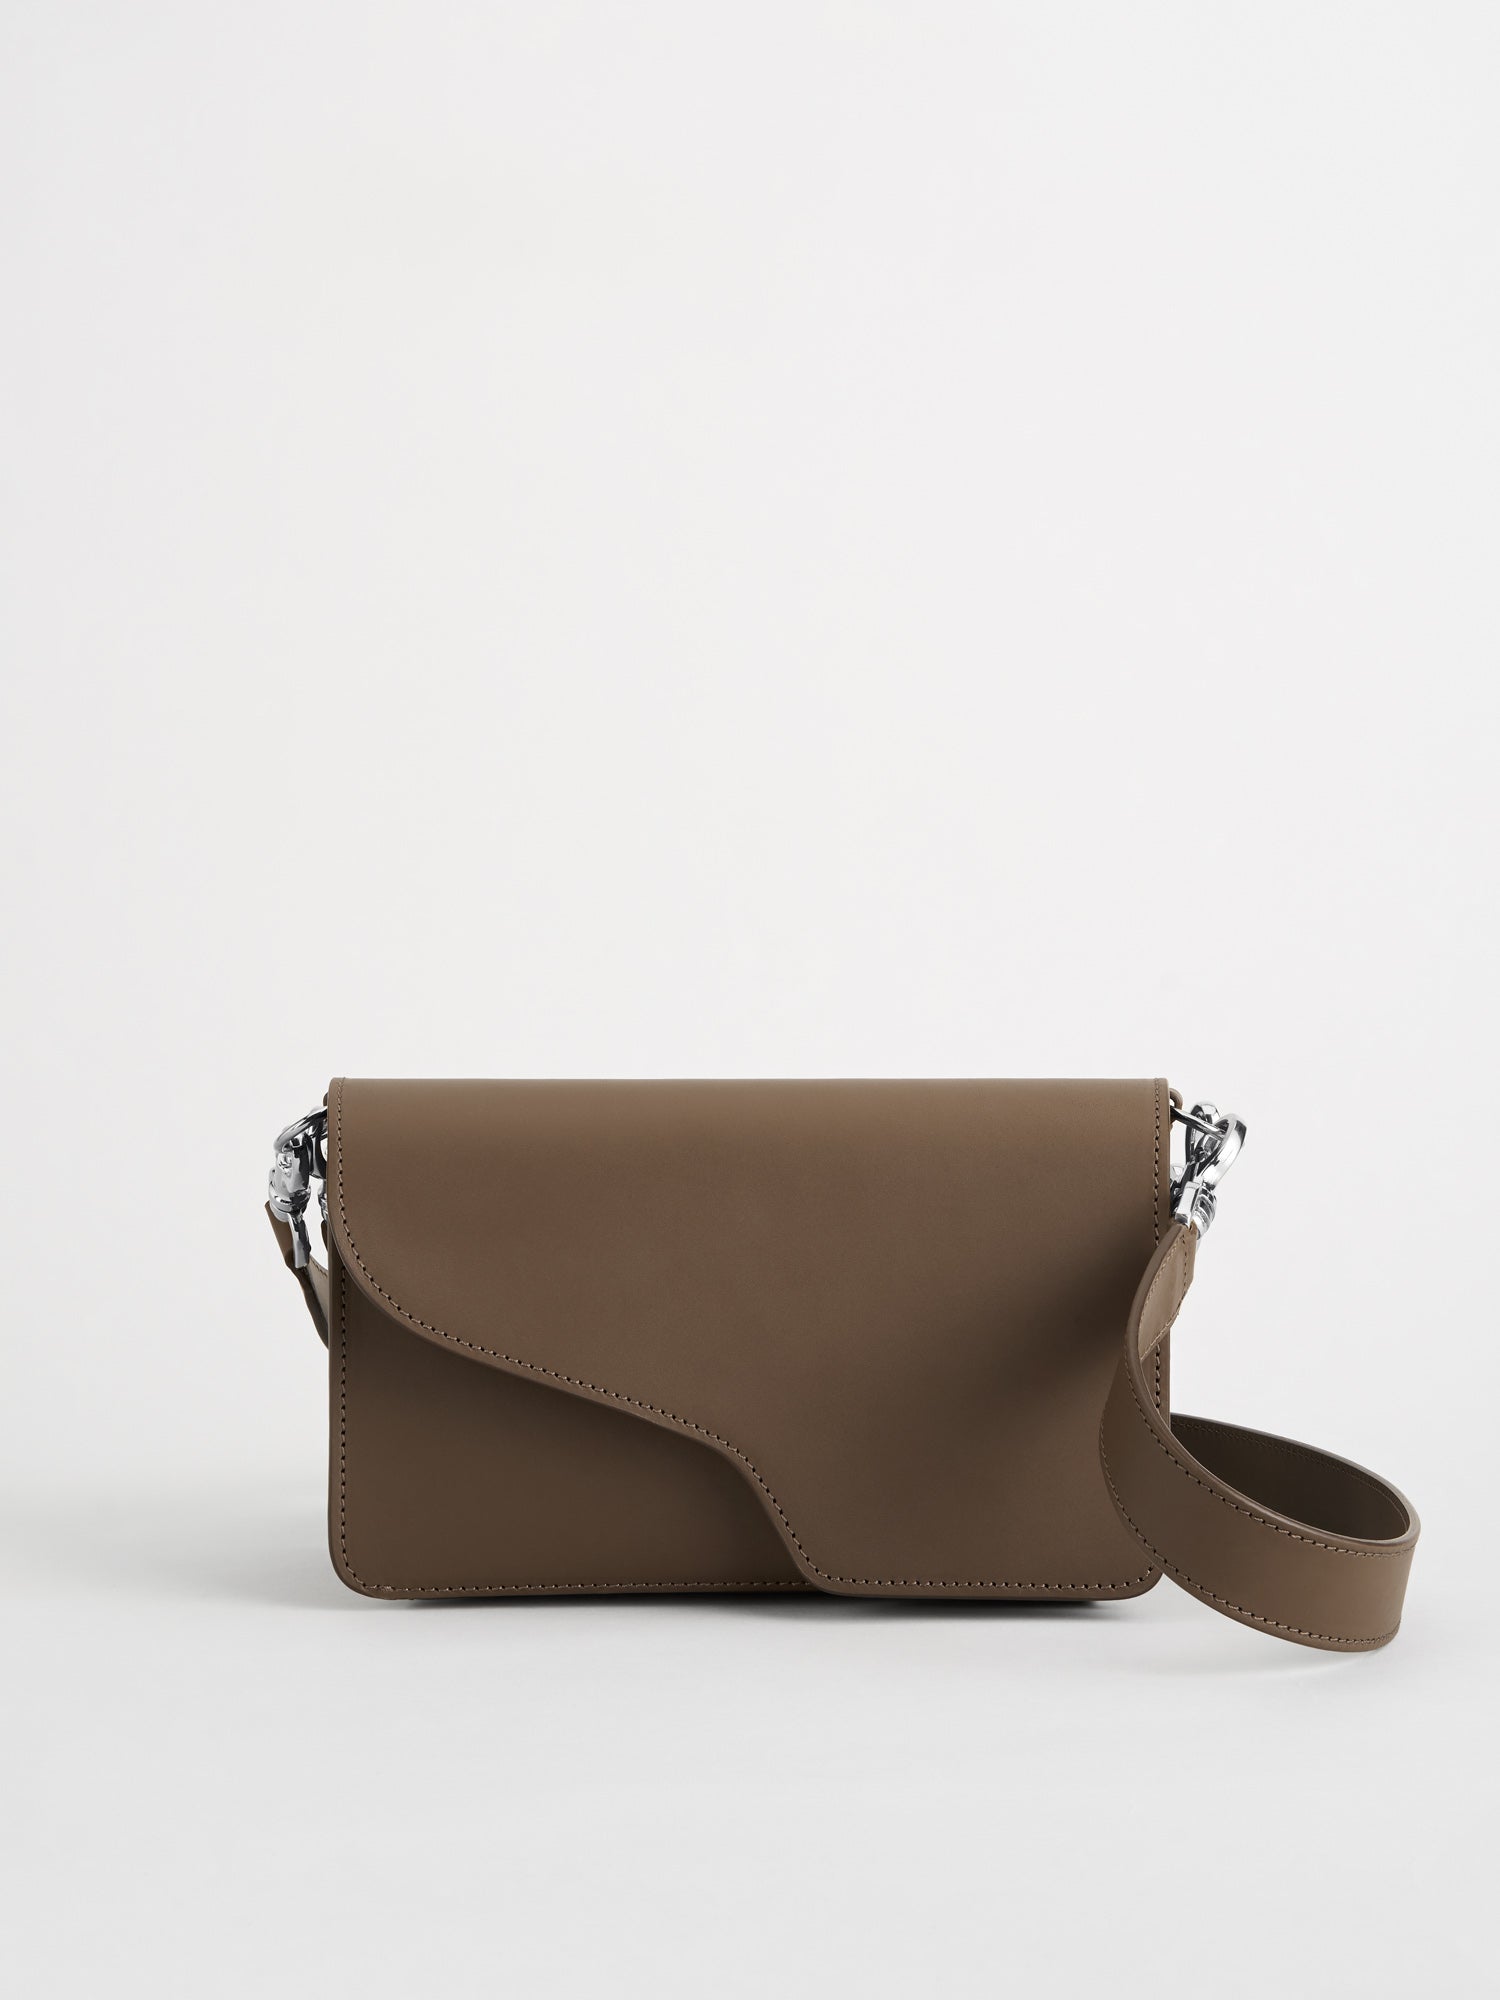 Assisi Khaki Brown/Silver Leather Shoulder Bag